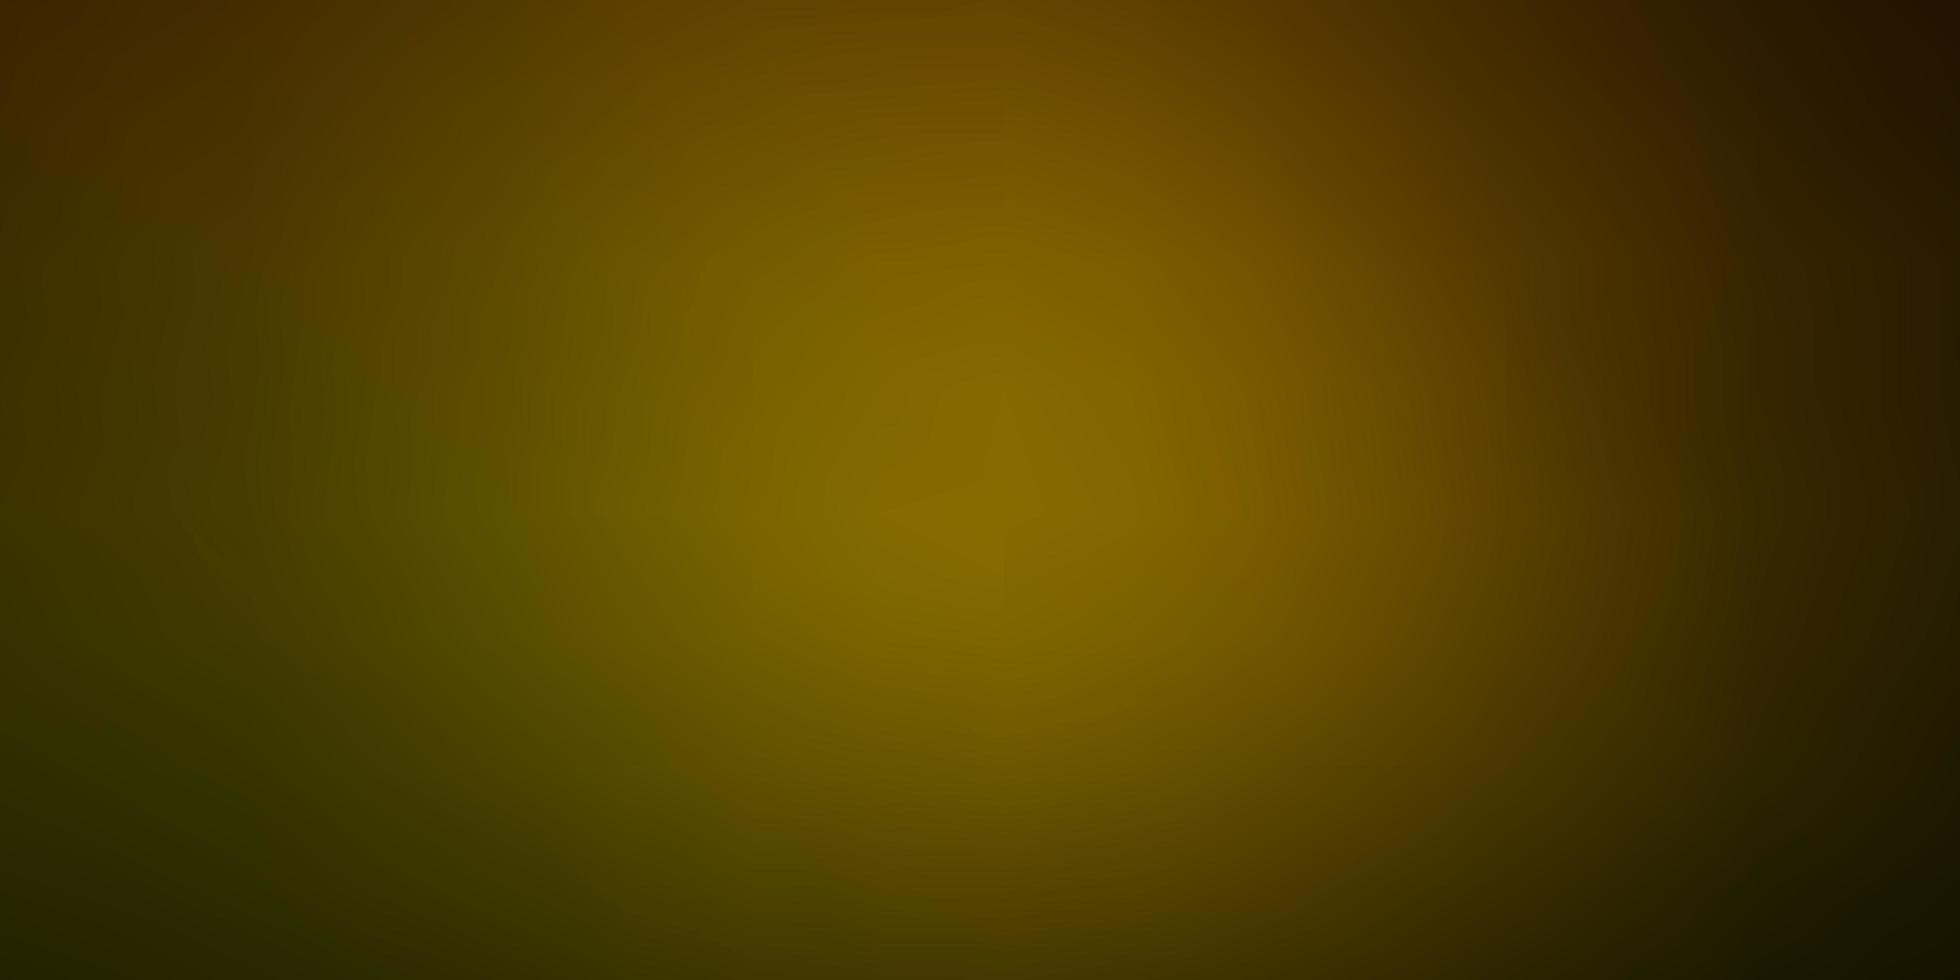 Dark Green, Yellow vector modern blurred layout.